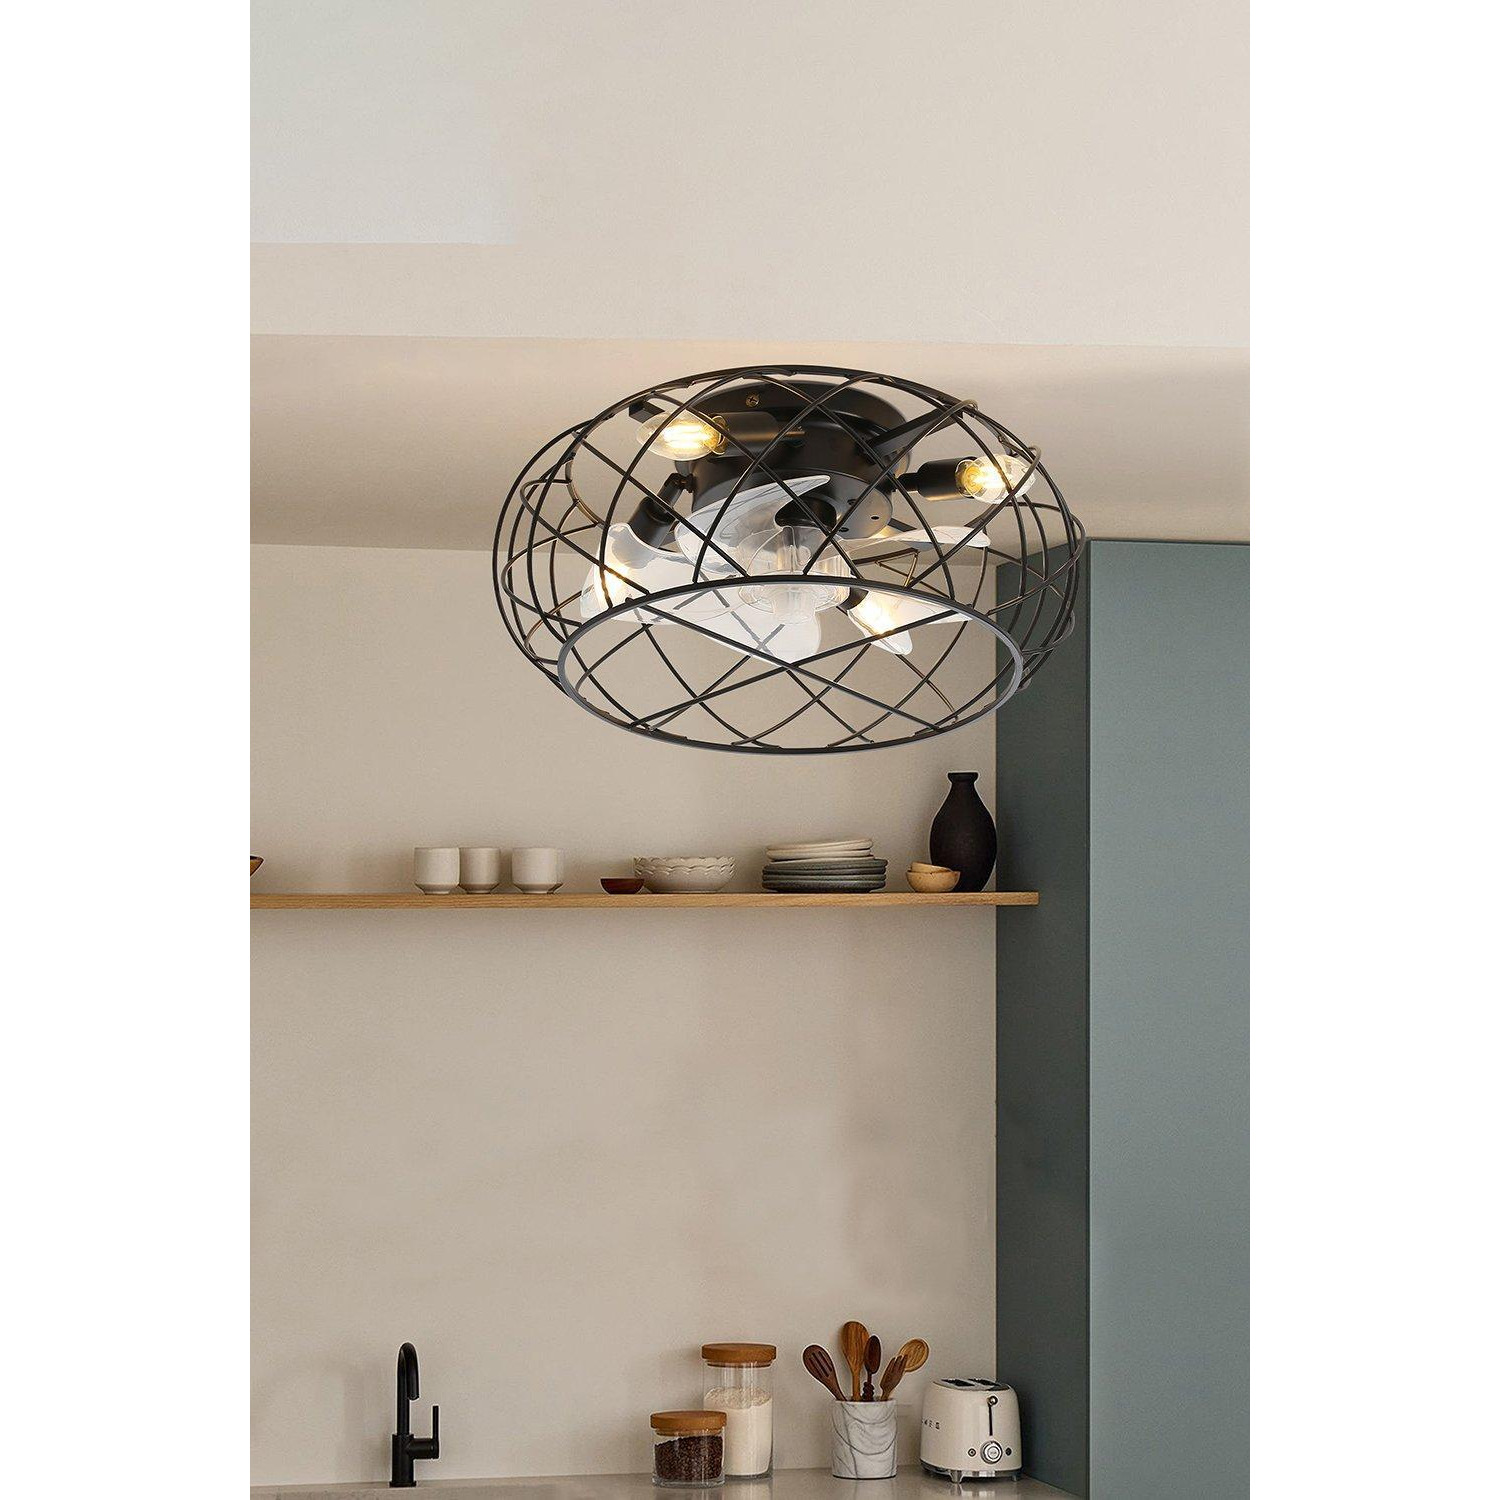 Black Cage Ceiling Fan Light - image 1